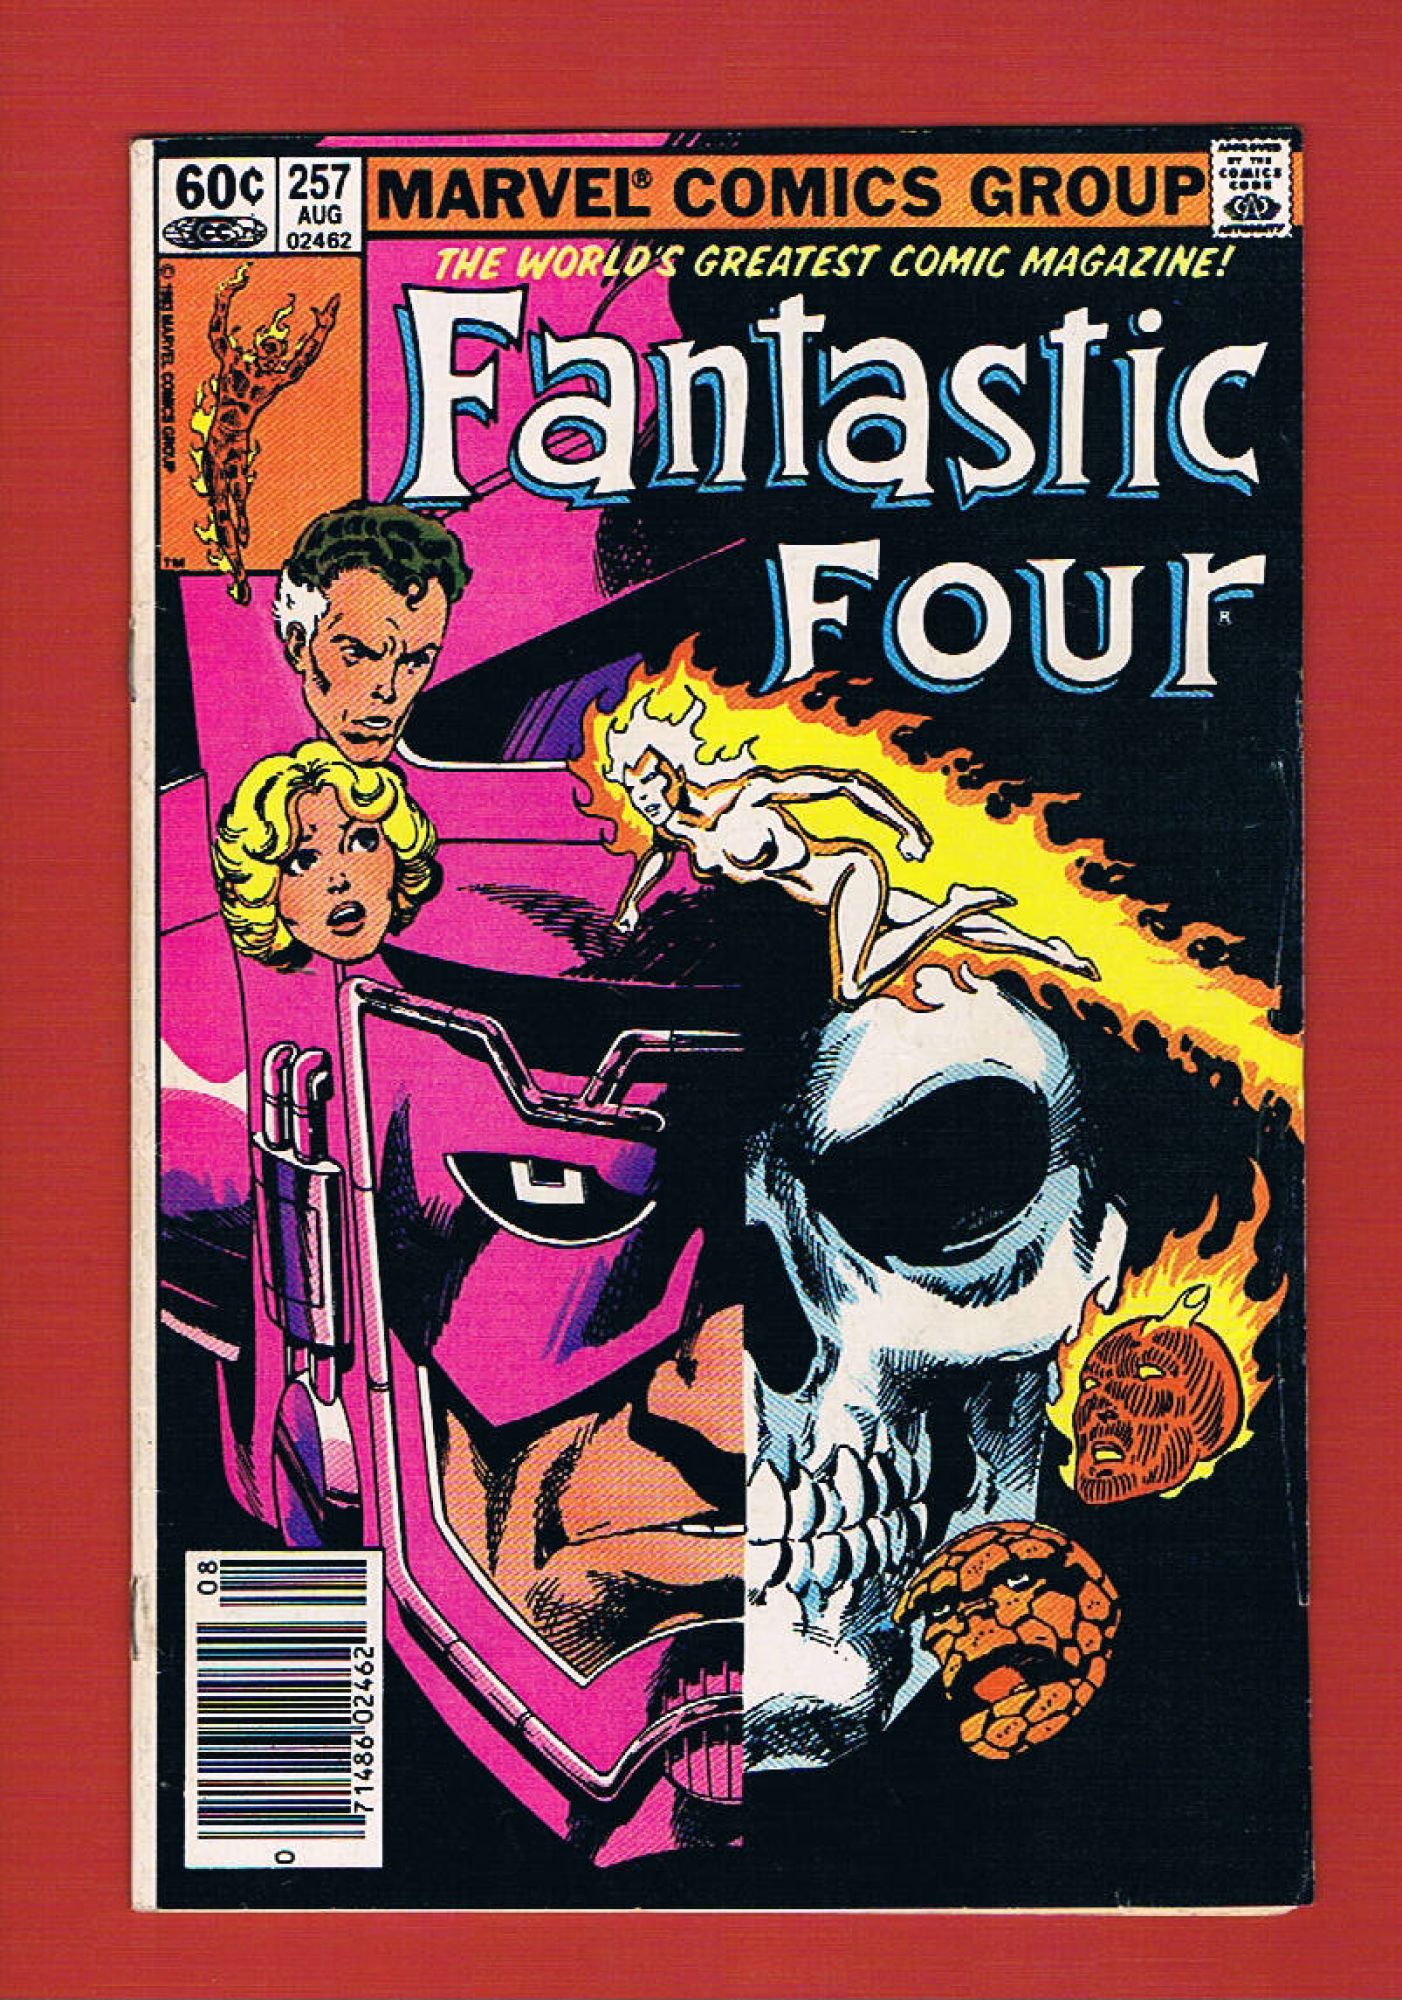 Fantastic Four #257, Aug 1983, 7.0 FN/VF